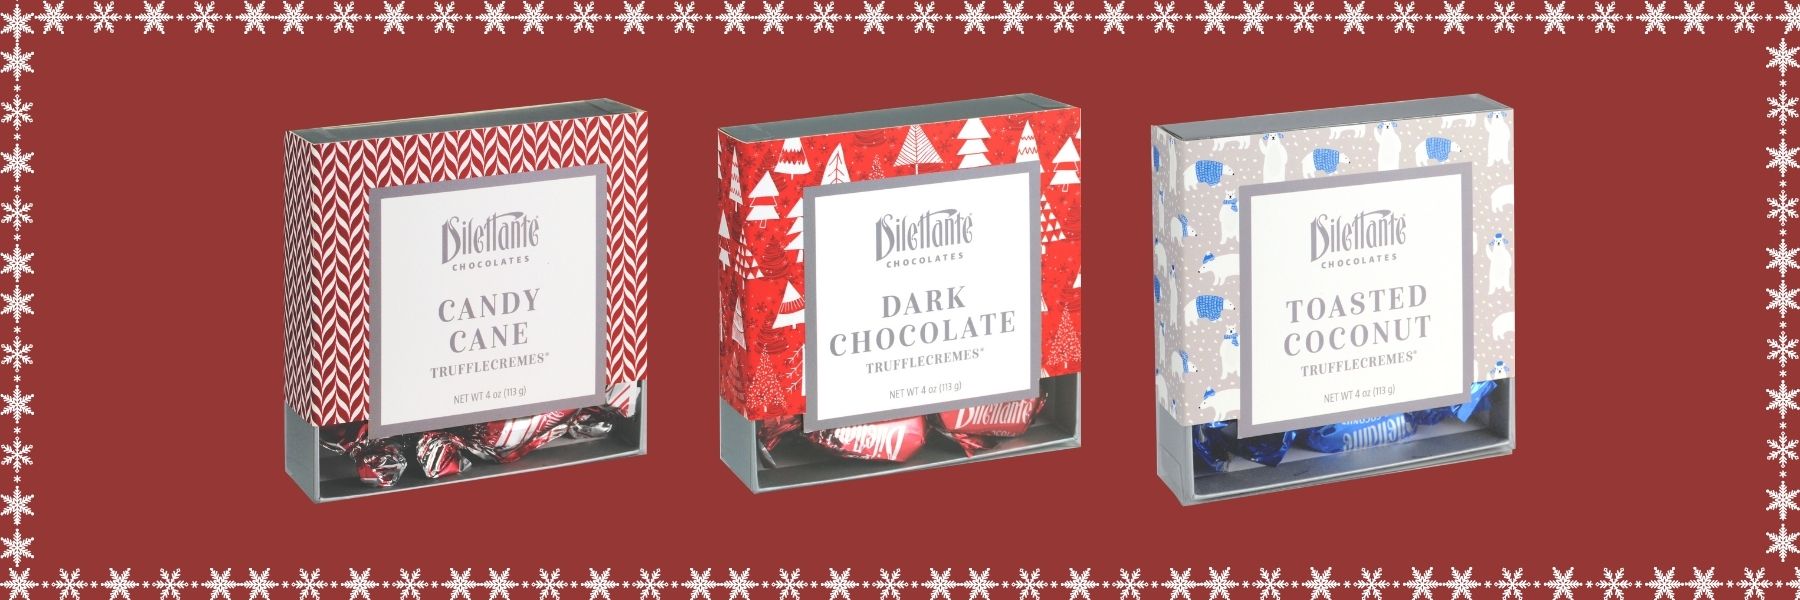 Dilettante Chocolates New Festive TruffleCreme Gift Boxes for the Holiday Season